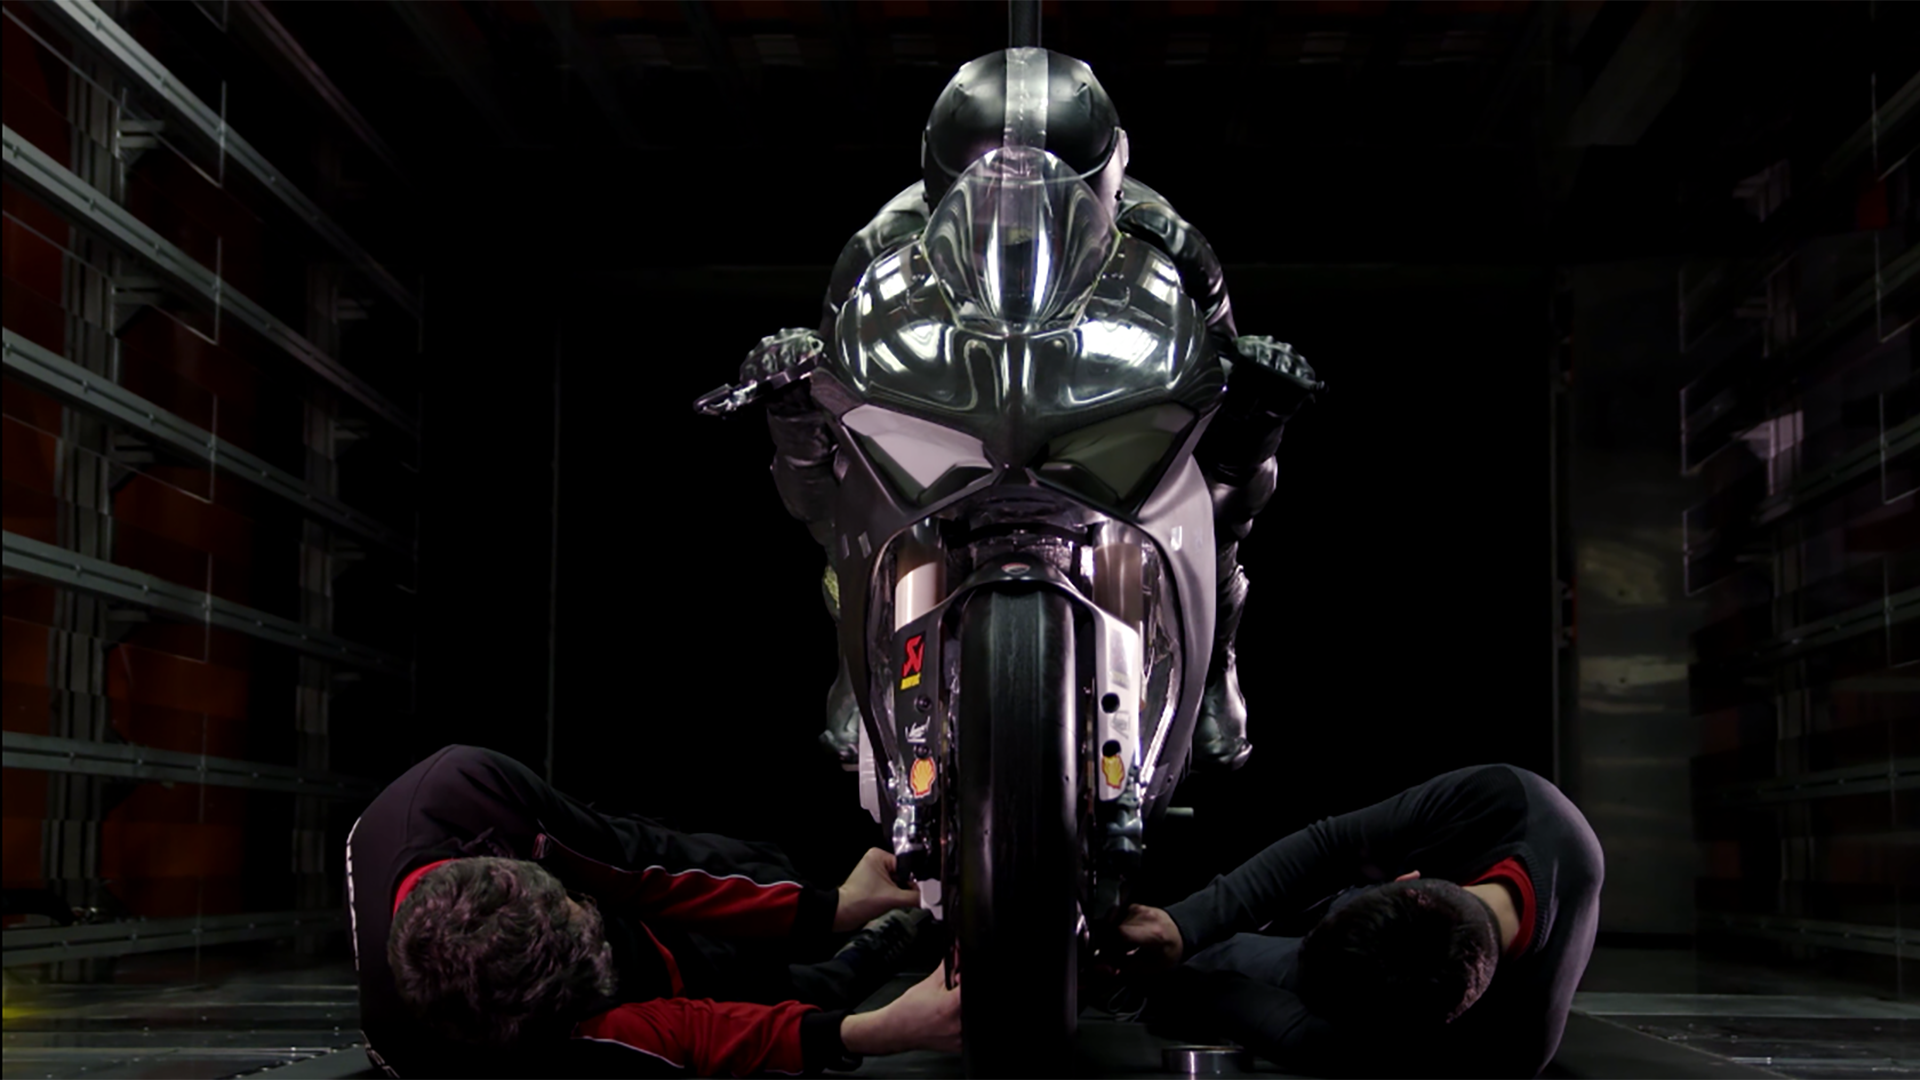 Testing the Ducati racing bike on virtual testing grounds